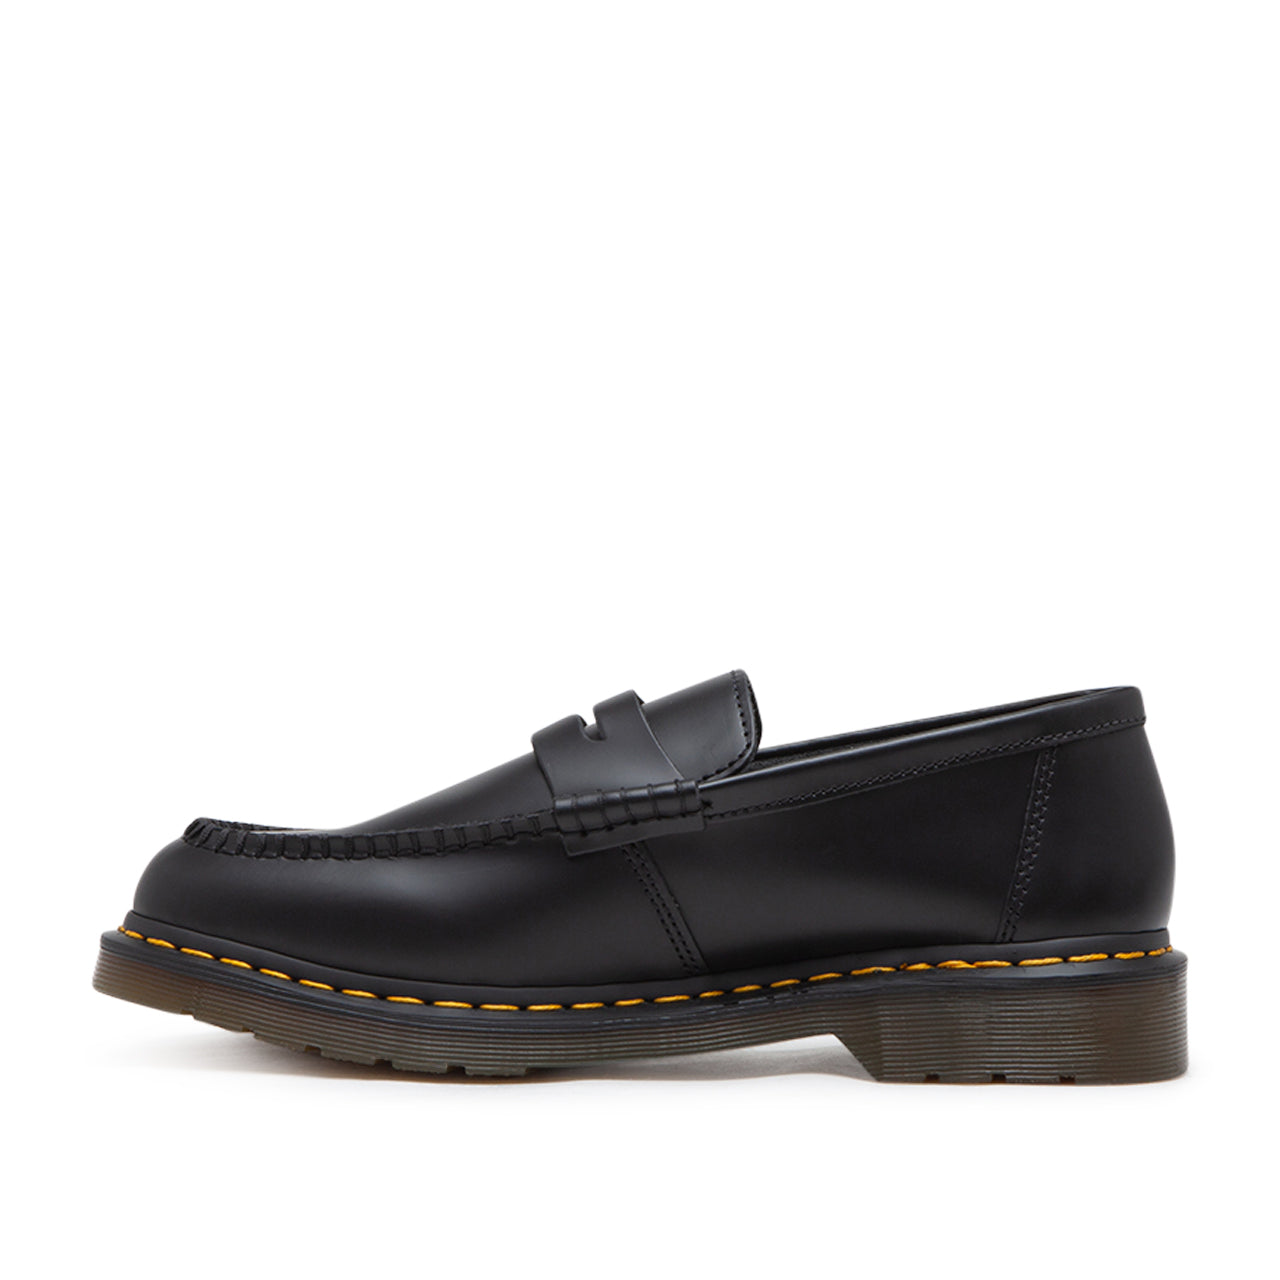 Dr. Martens Shoe Penton Smooth Leather Loafers (Schwarz)  - Cheap Juzsports Jordan Outlet